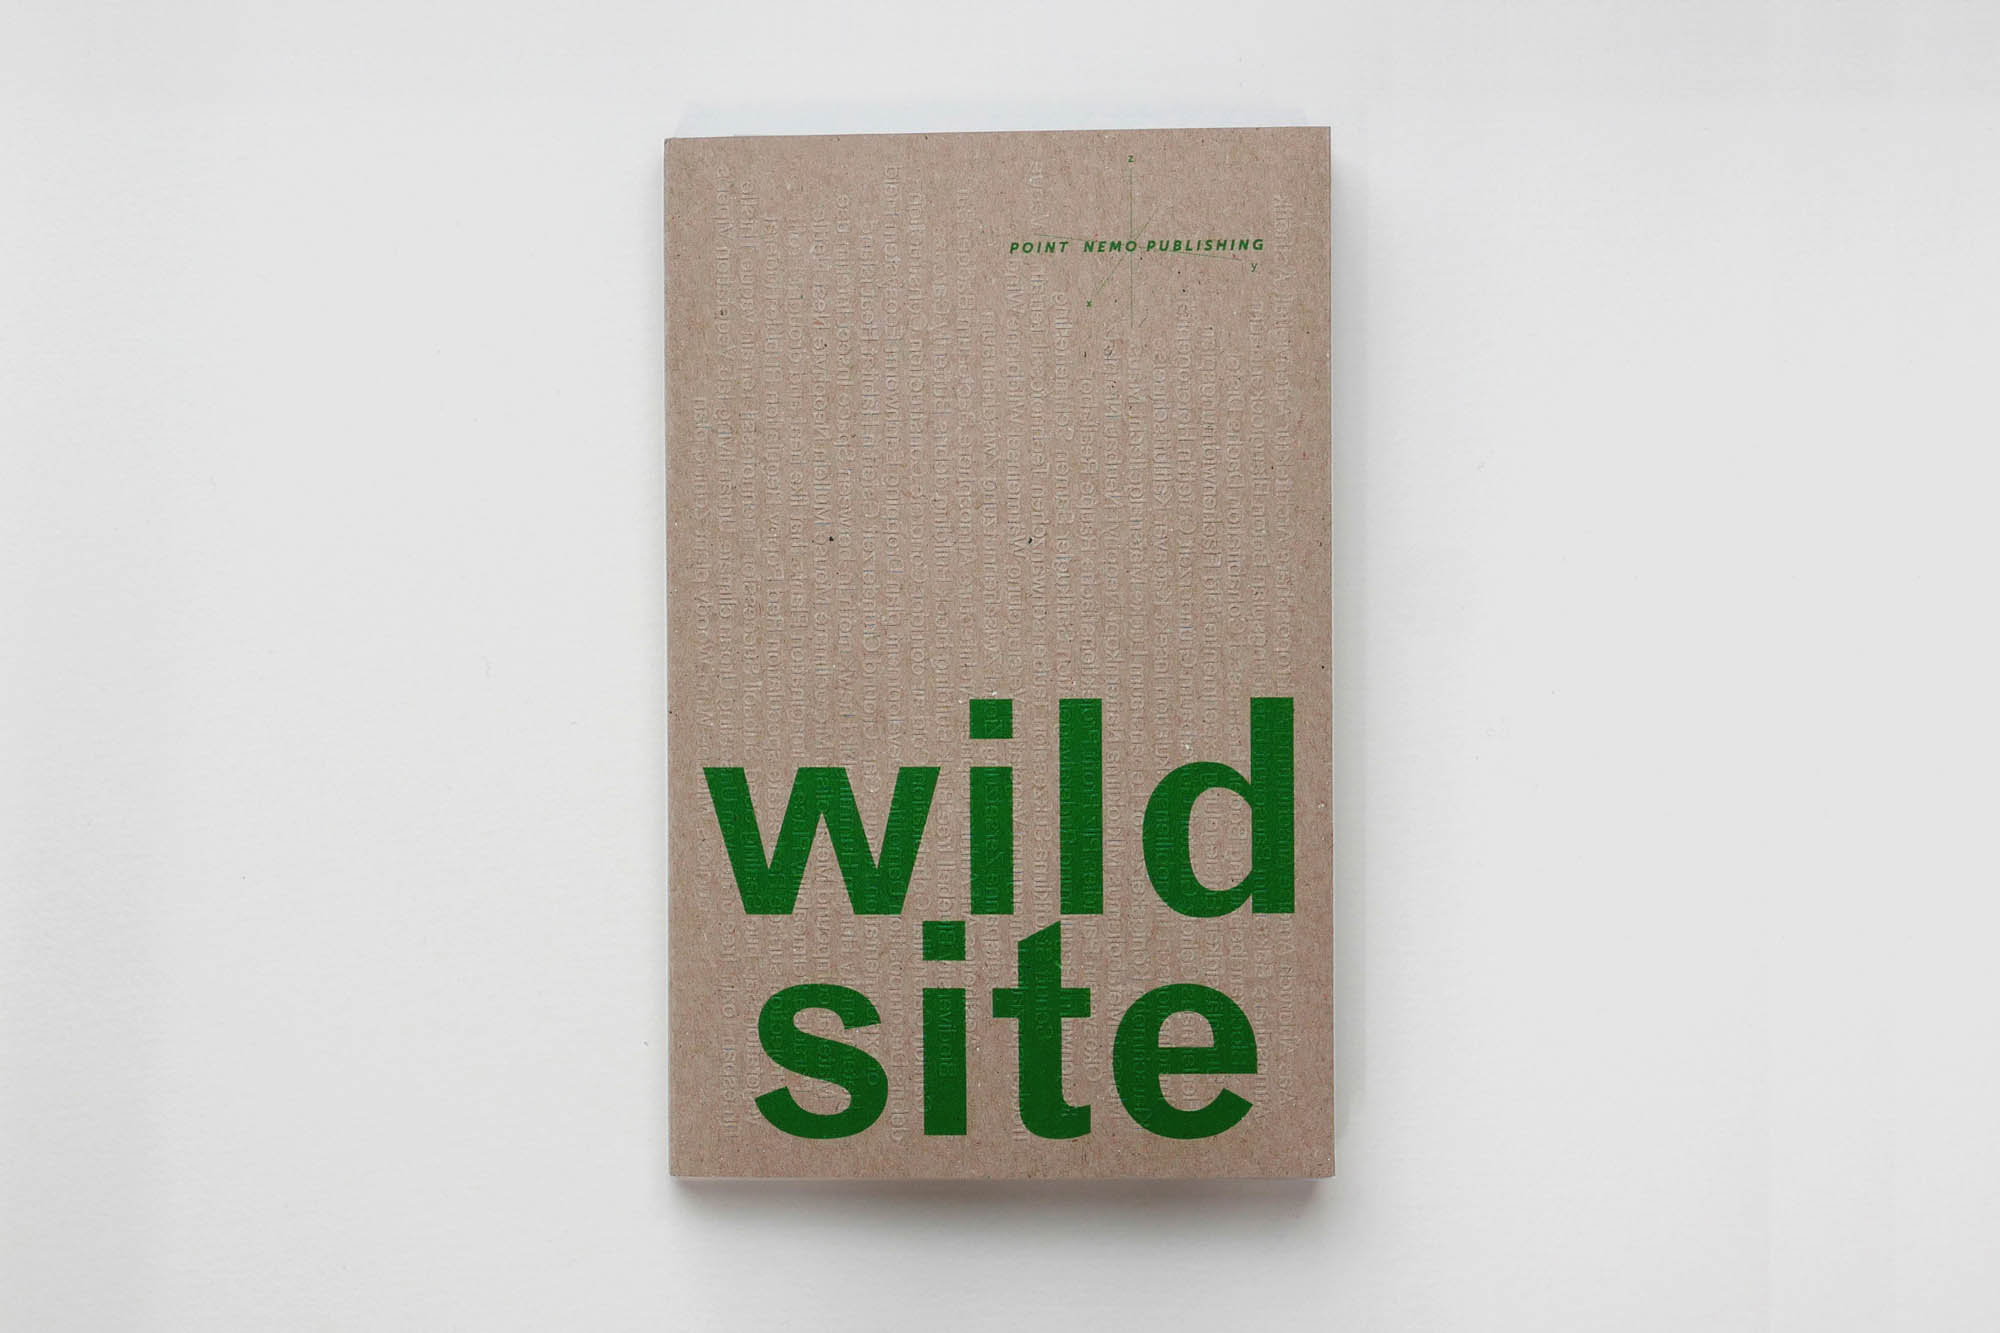 Point Nemo Publishing / Anna Valentiny - Wild Site : book presentation & photo installation